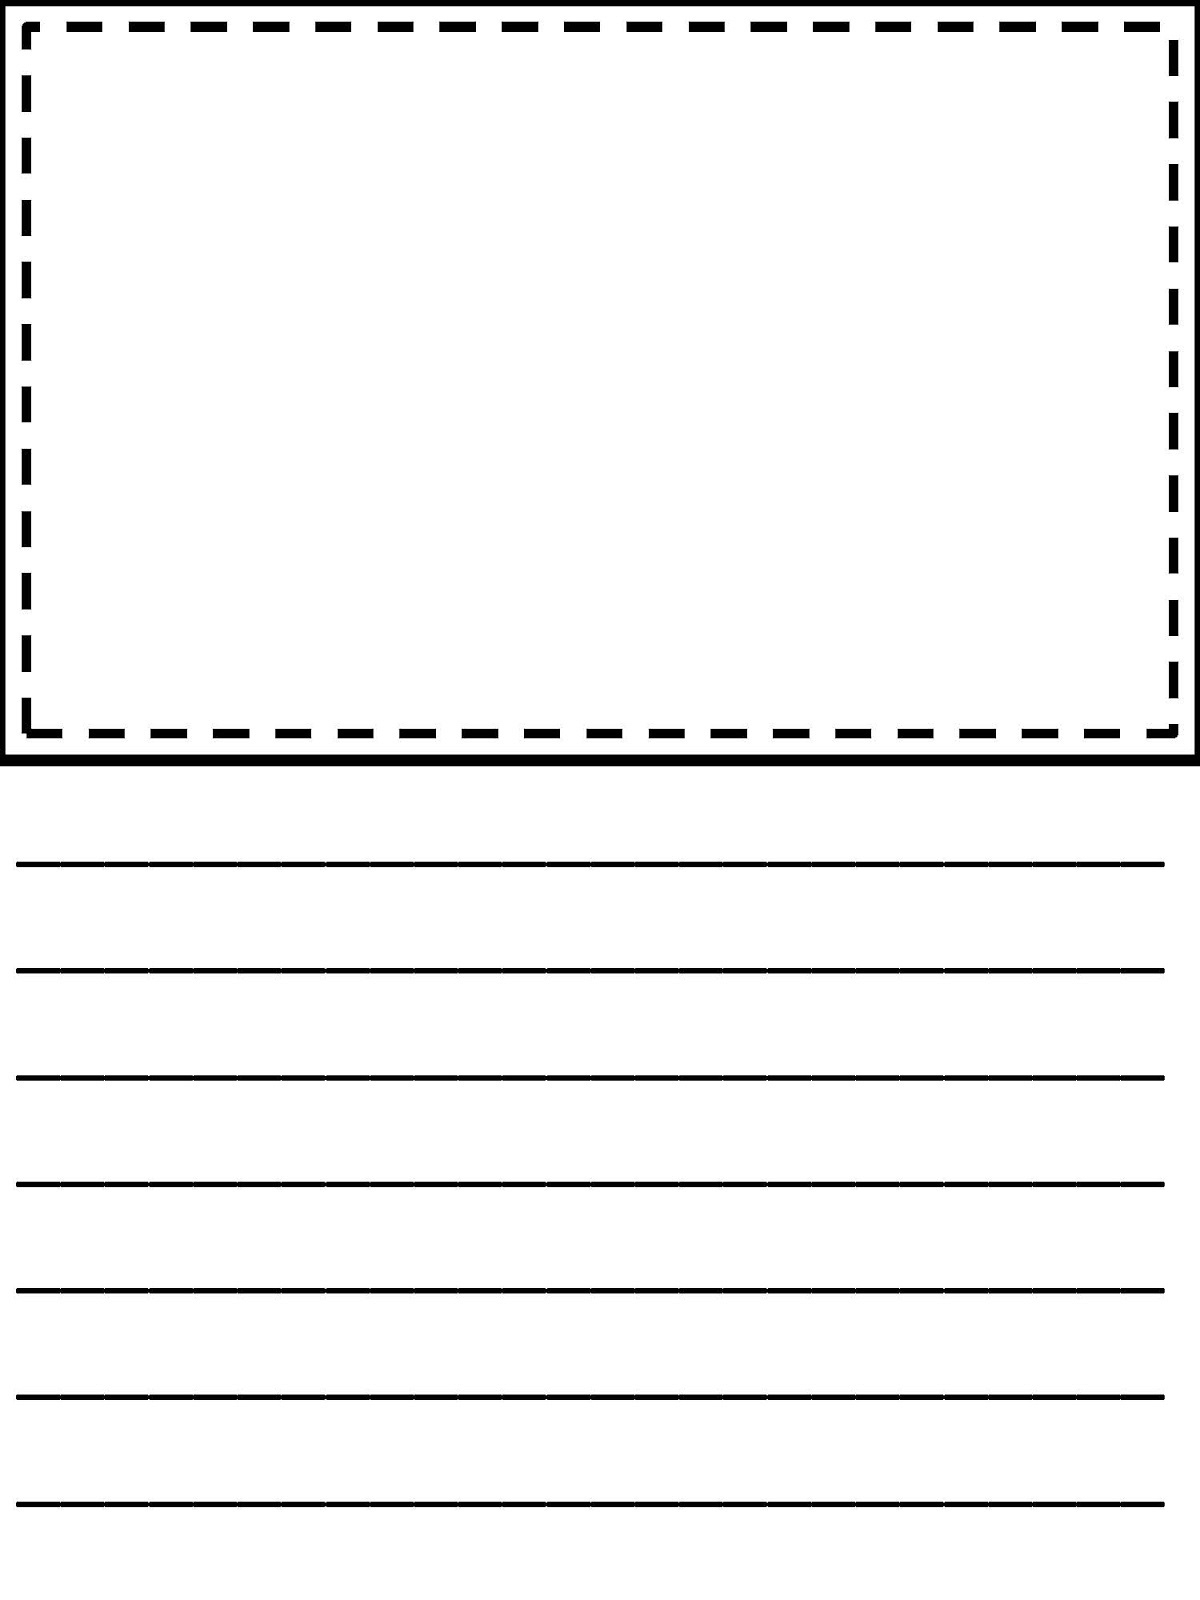 Third Grade Writing Paper | Homeshealth Handwriting Template - Free Printable Writing Paper